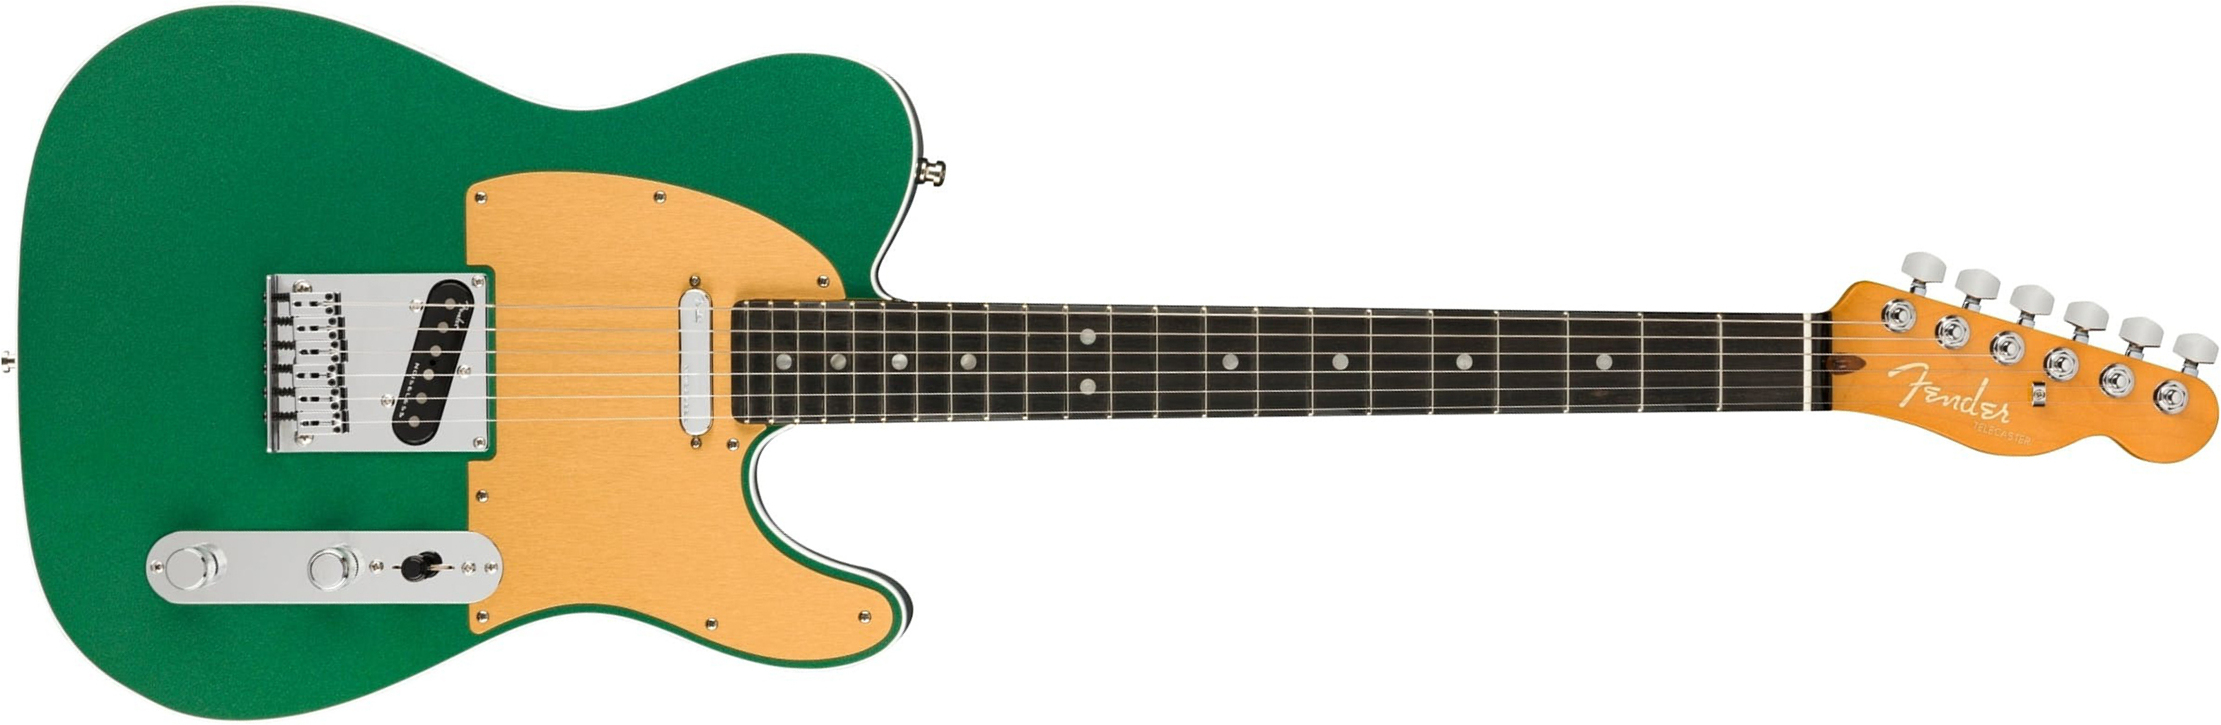 Fender Tele American Ultra Fsr Ltd Usa 2s Ht Eb - Mystic Pine Green - Guitarra eléctrica con forma de tel - Main picture